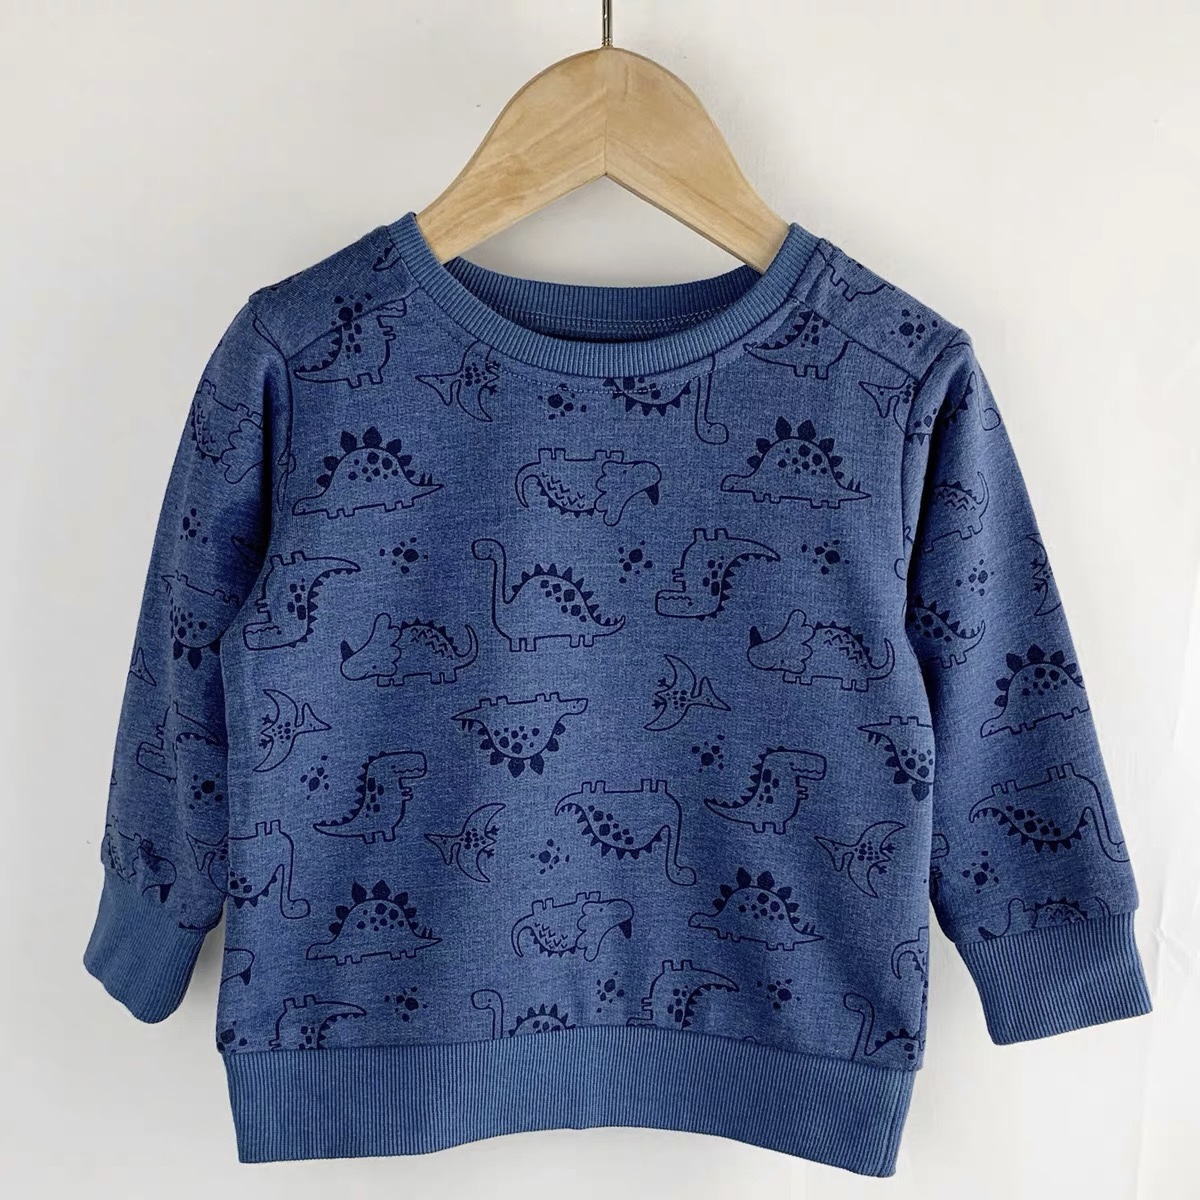 Sweatshirt with dinosaurs